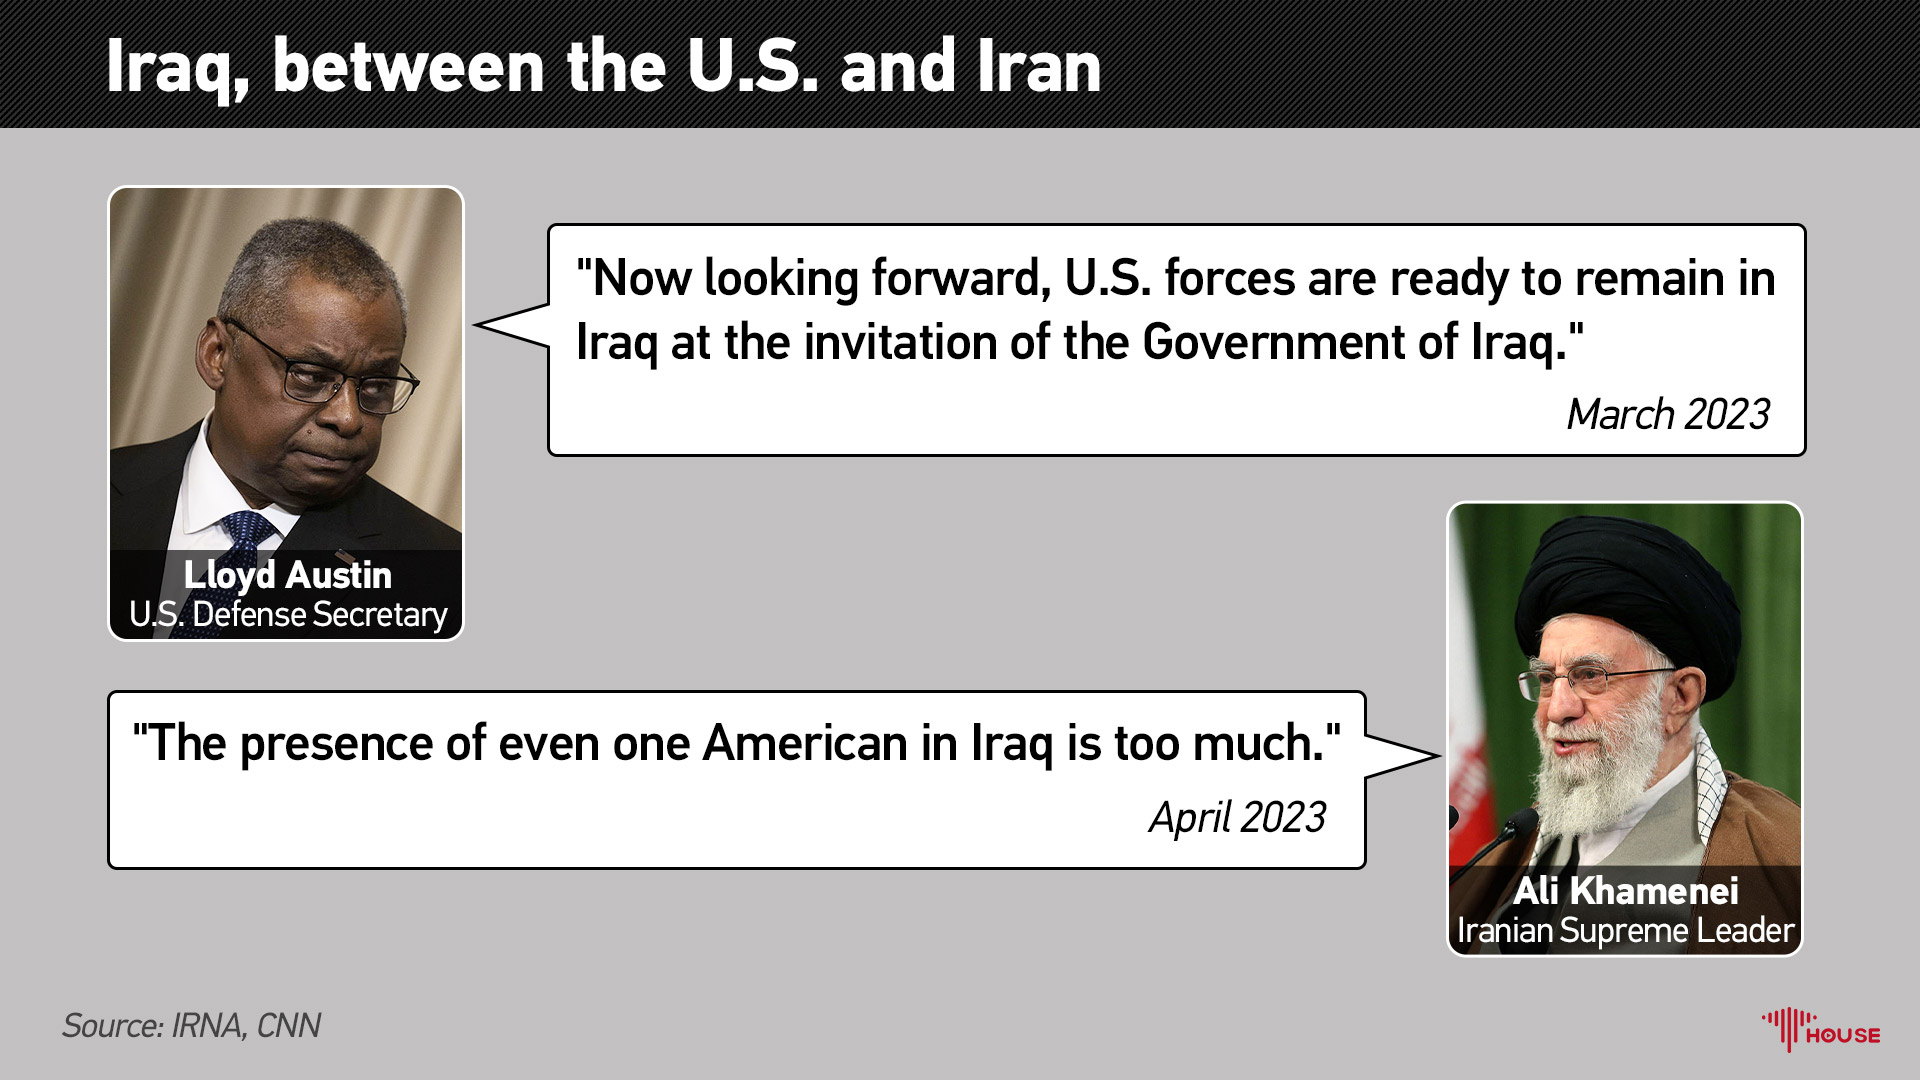 Iraq, between the U.S. and Iran